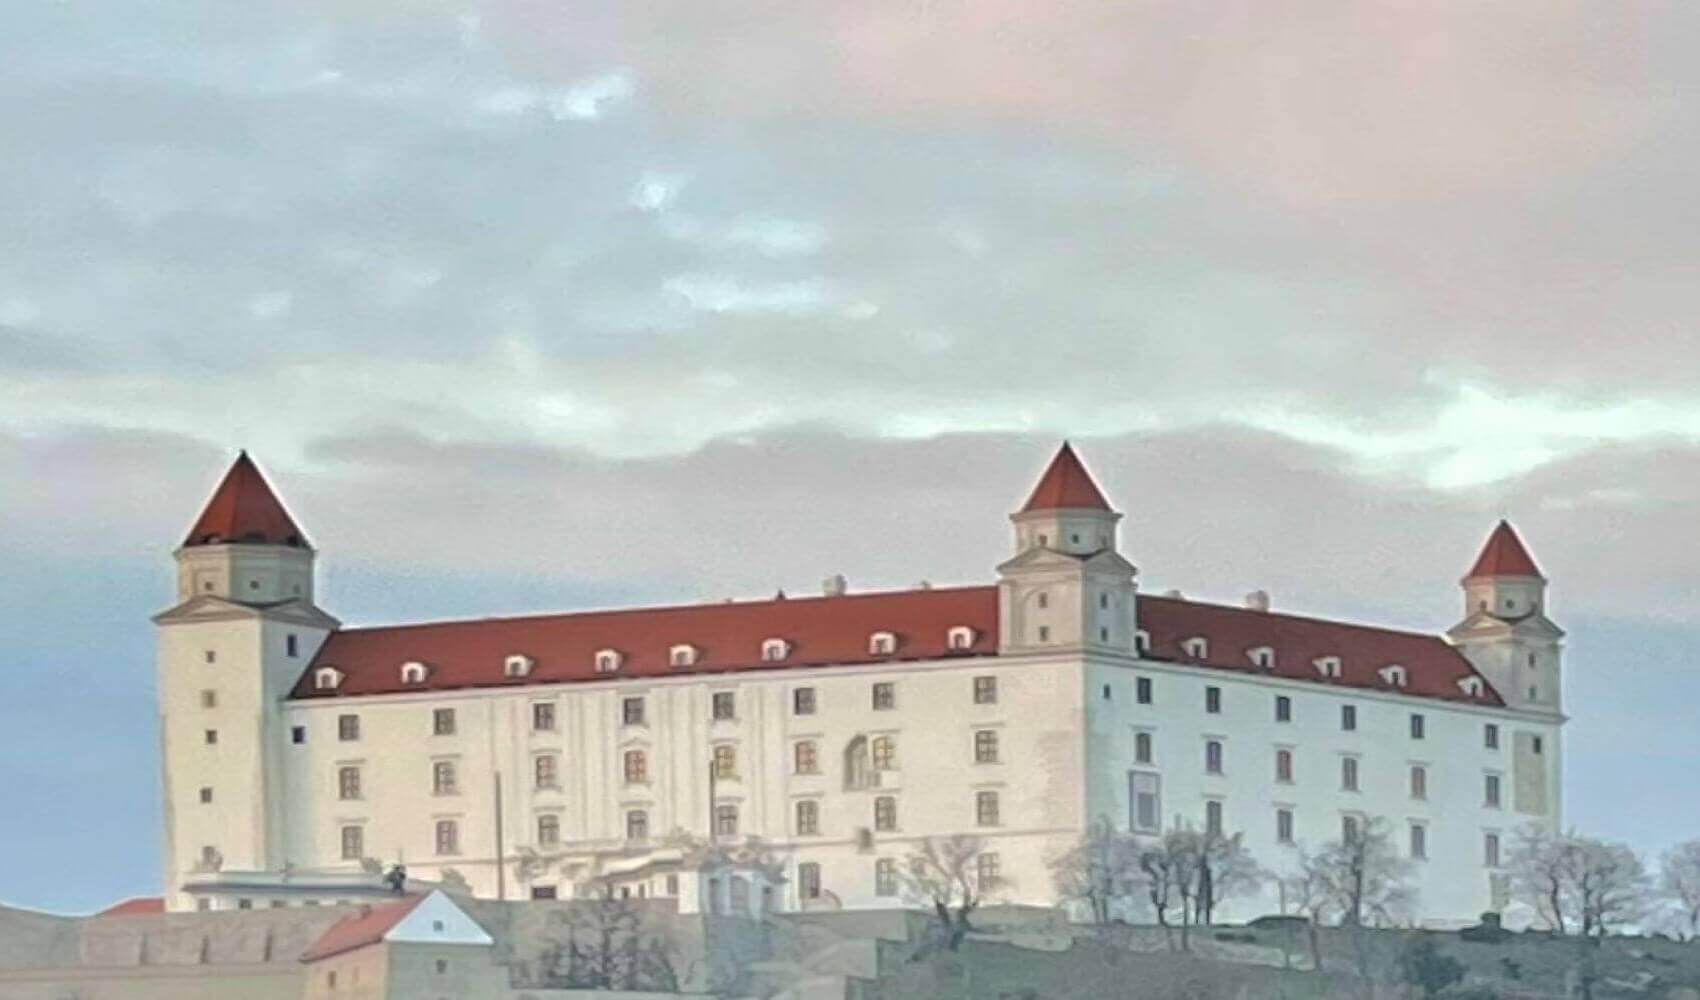 bratislava castle at sunset